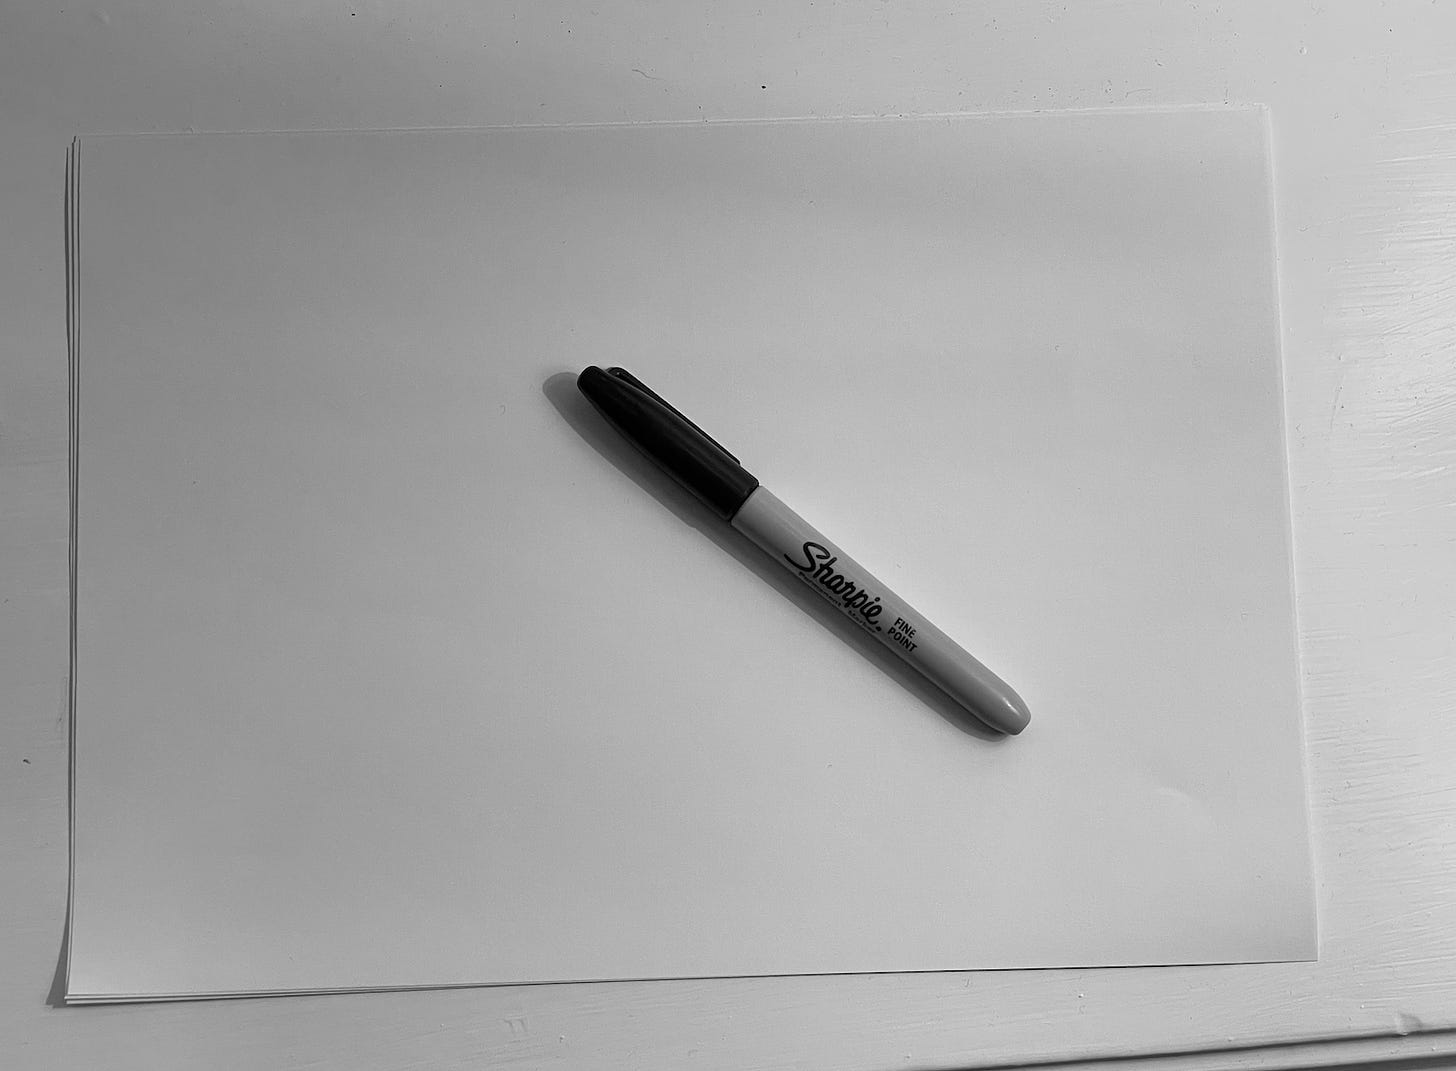 A4-sized blank paper and sharpie felt pen